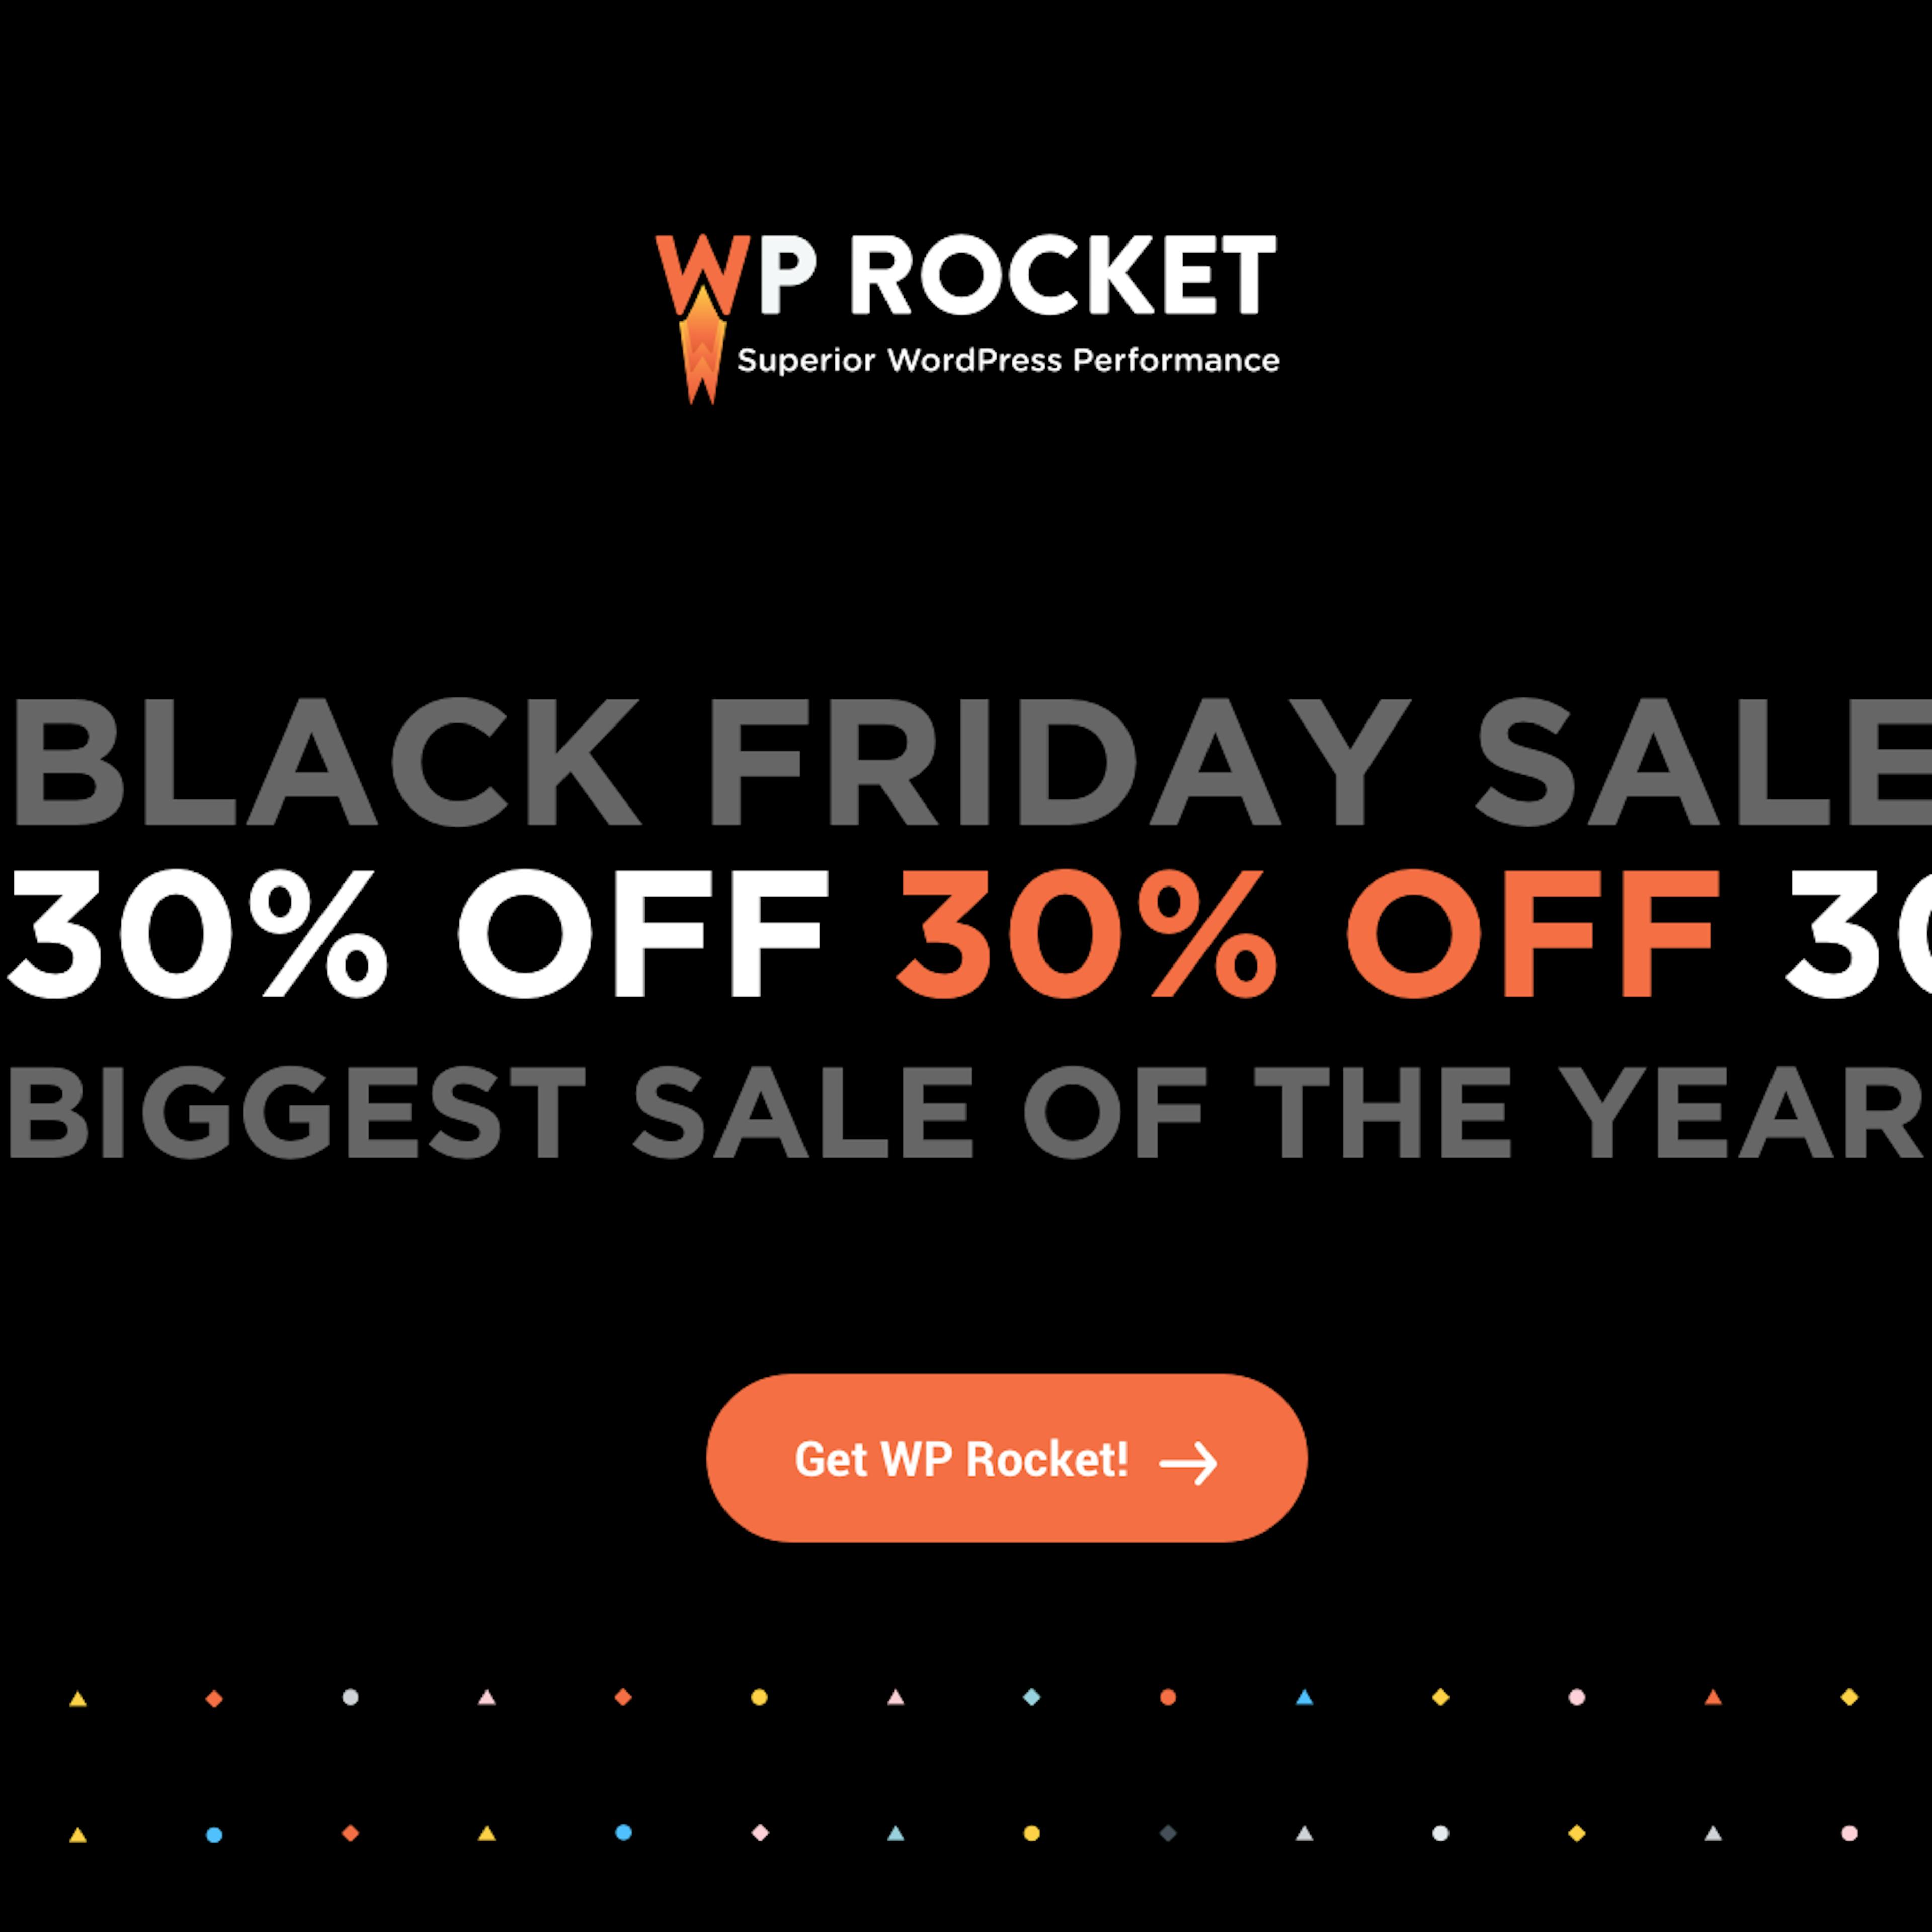 WP Rocket Black Friday sale 2021